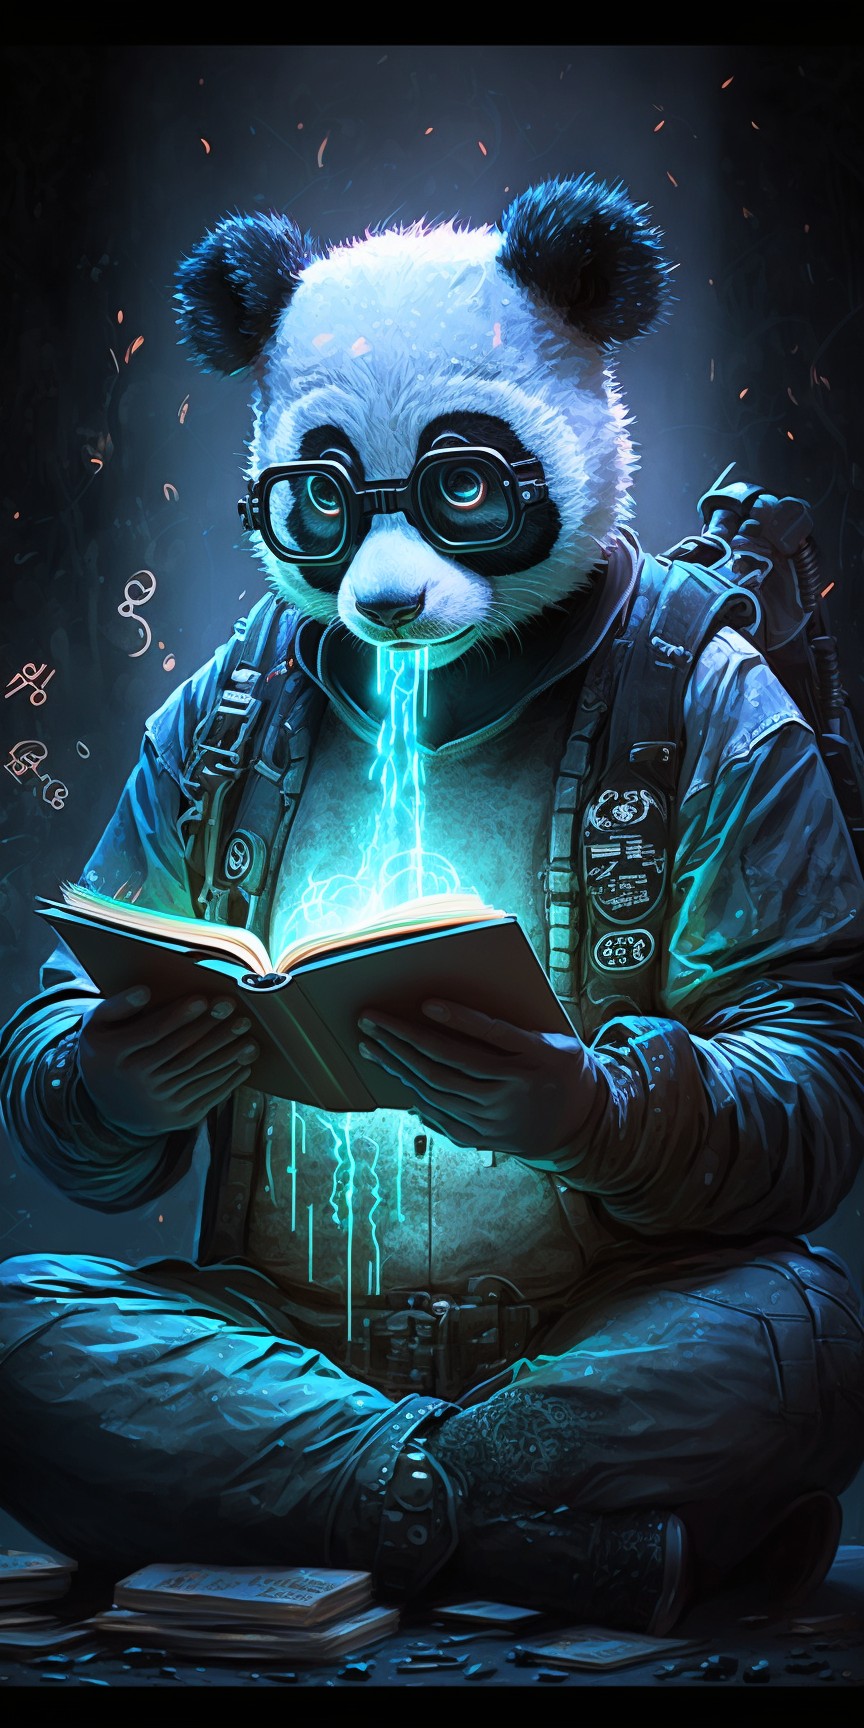 Panda father reading a book